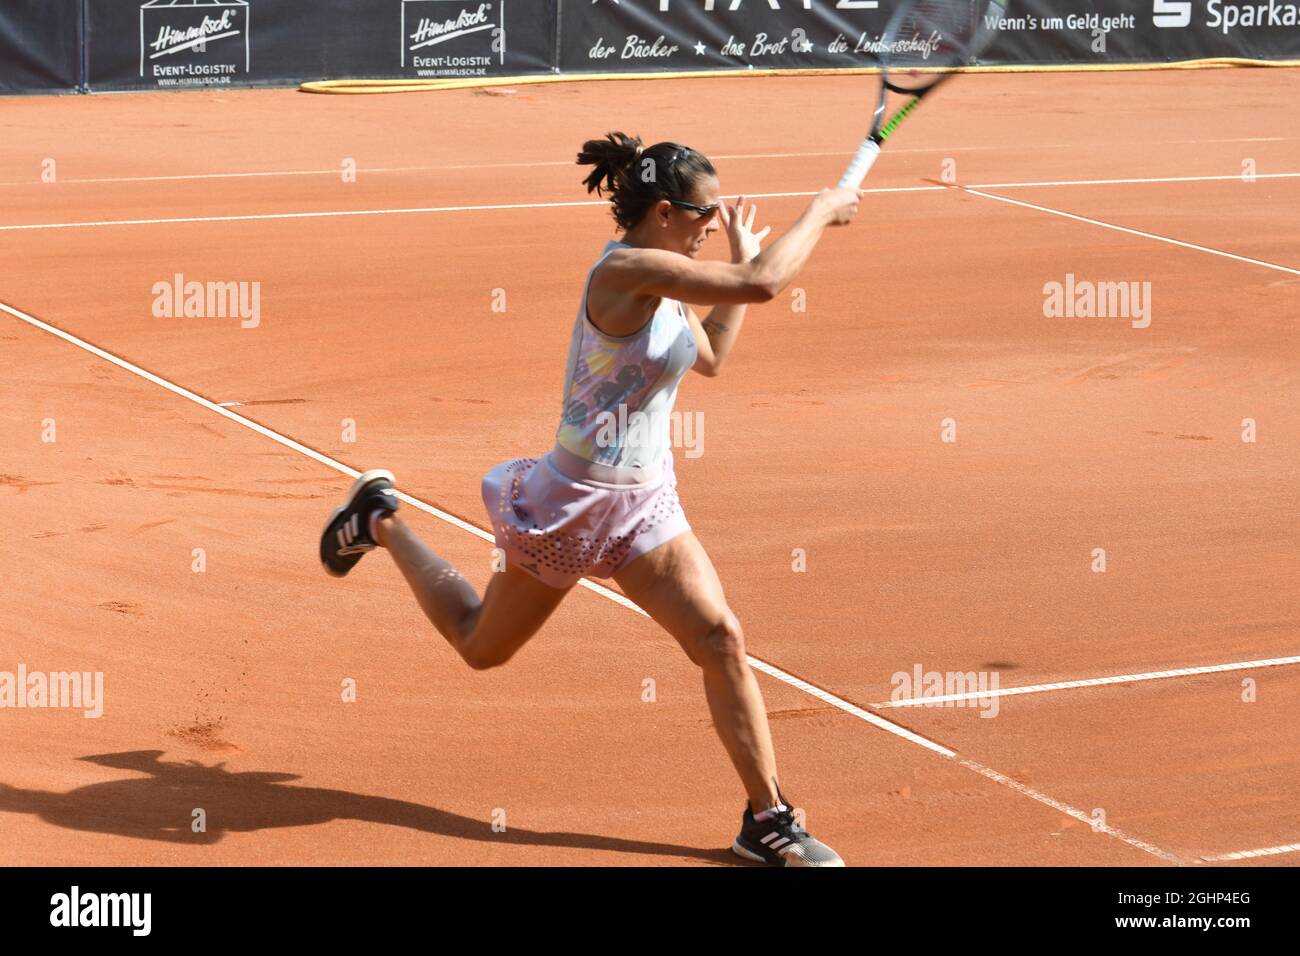 Liqui Moly Open 2021 WTA Turnier Karlsruhe 7. September 2021 beim TC  Rüppurr Stock Photo - Alamy